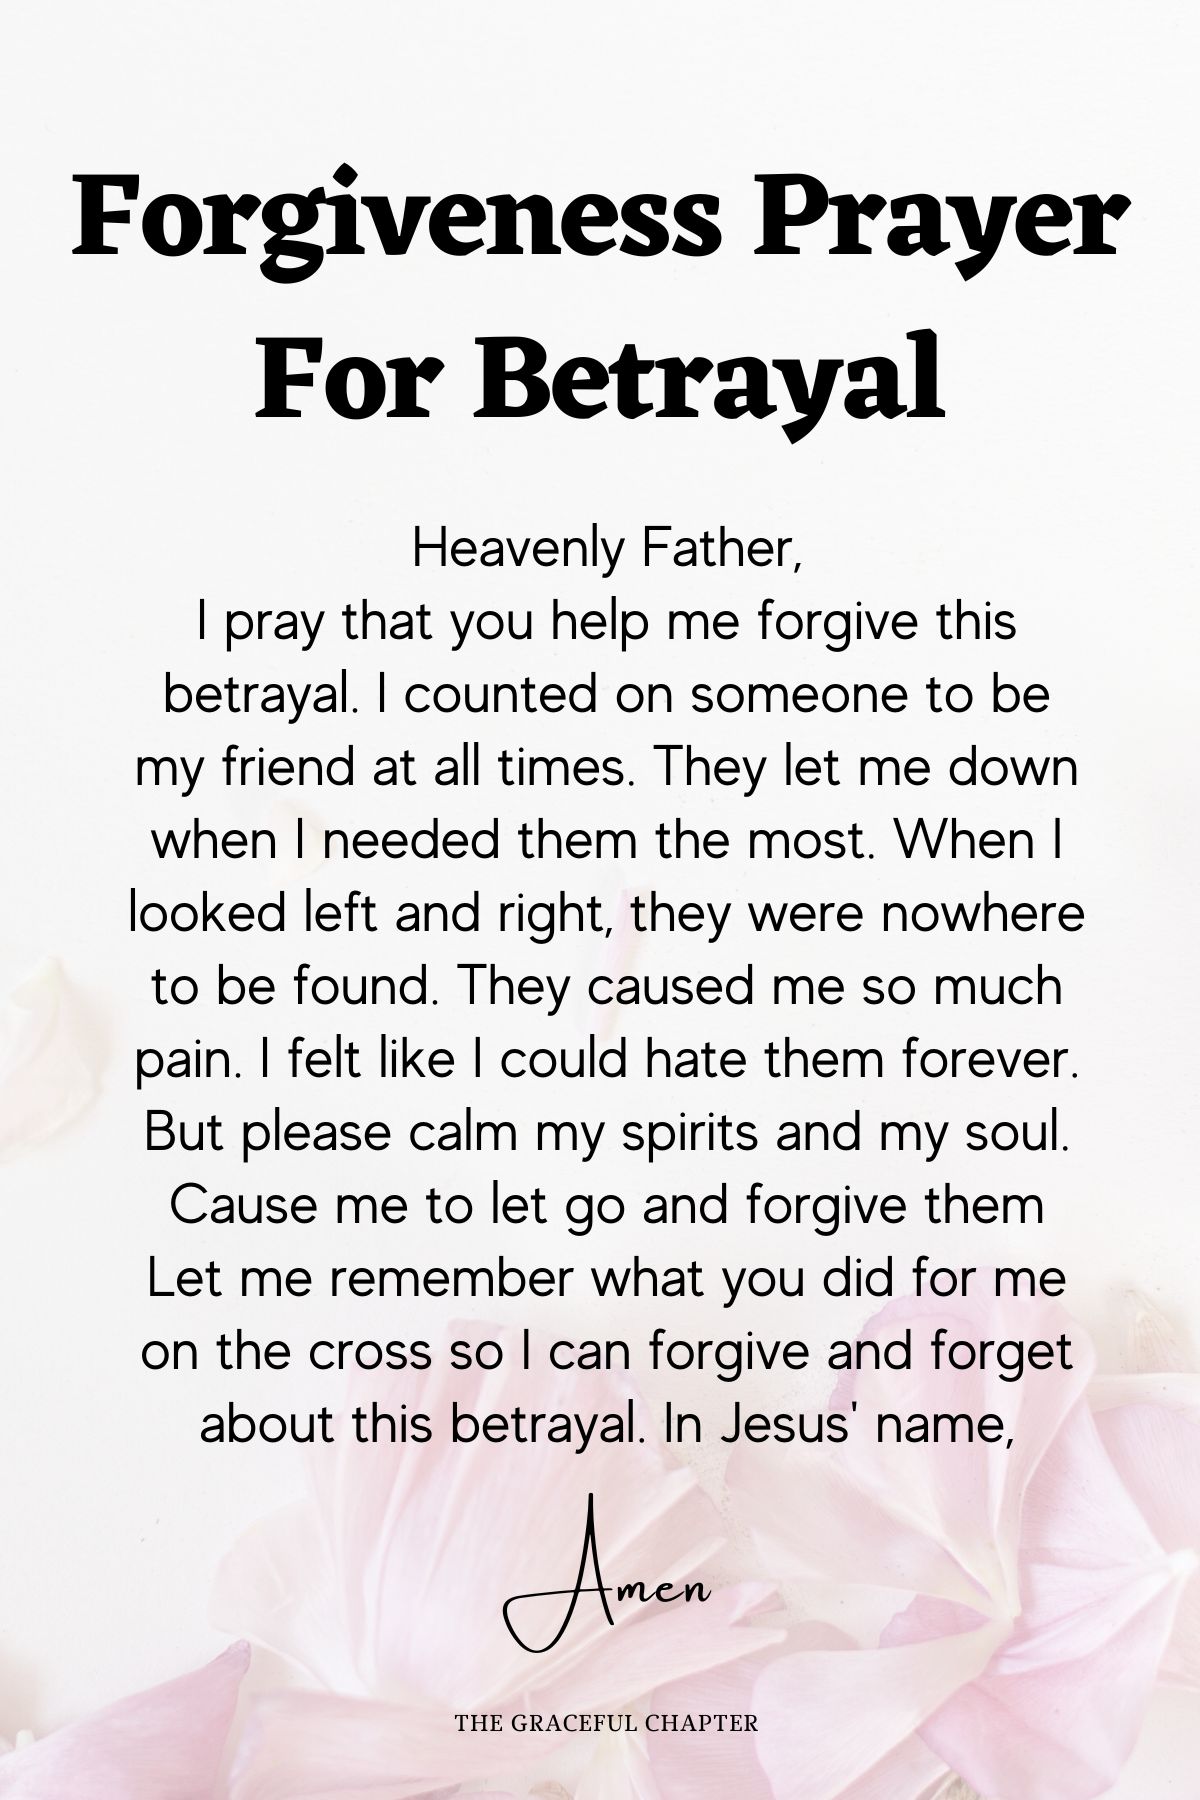 Forgiveness prayer for betrayal - prayers for forgiveness